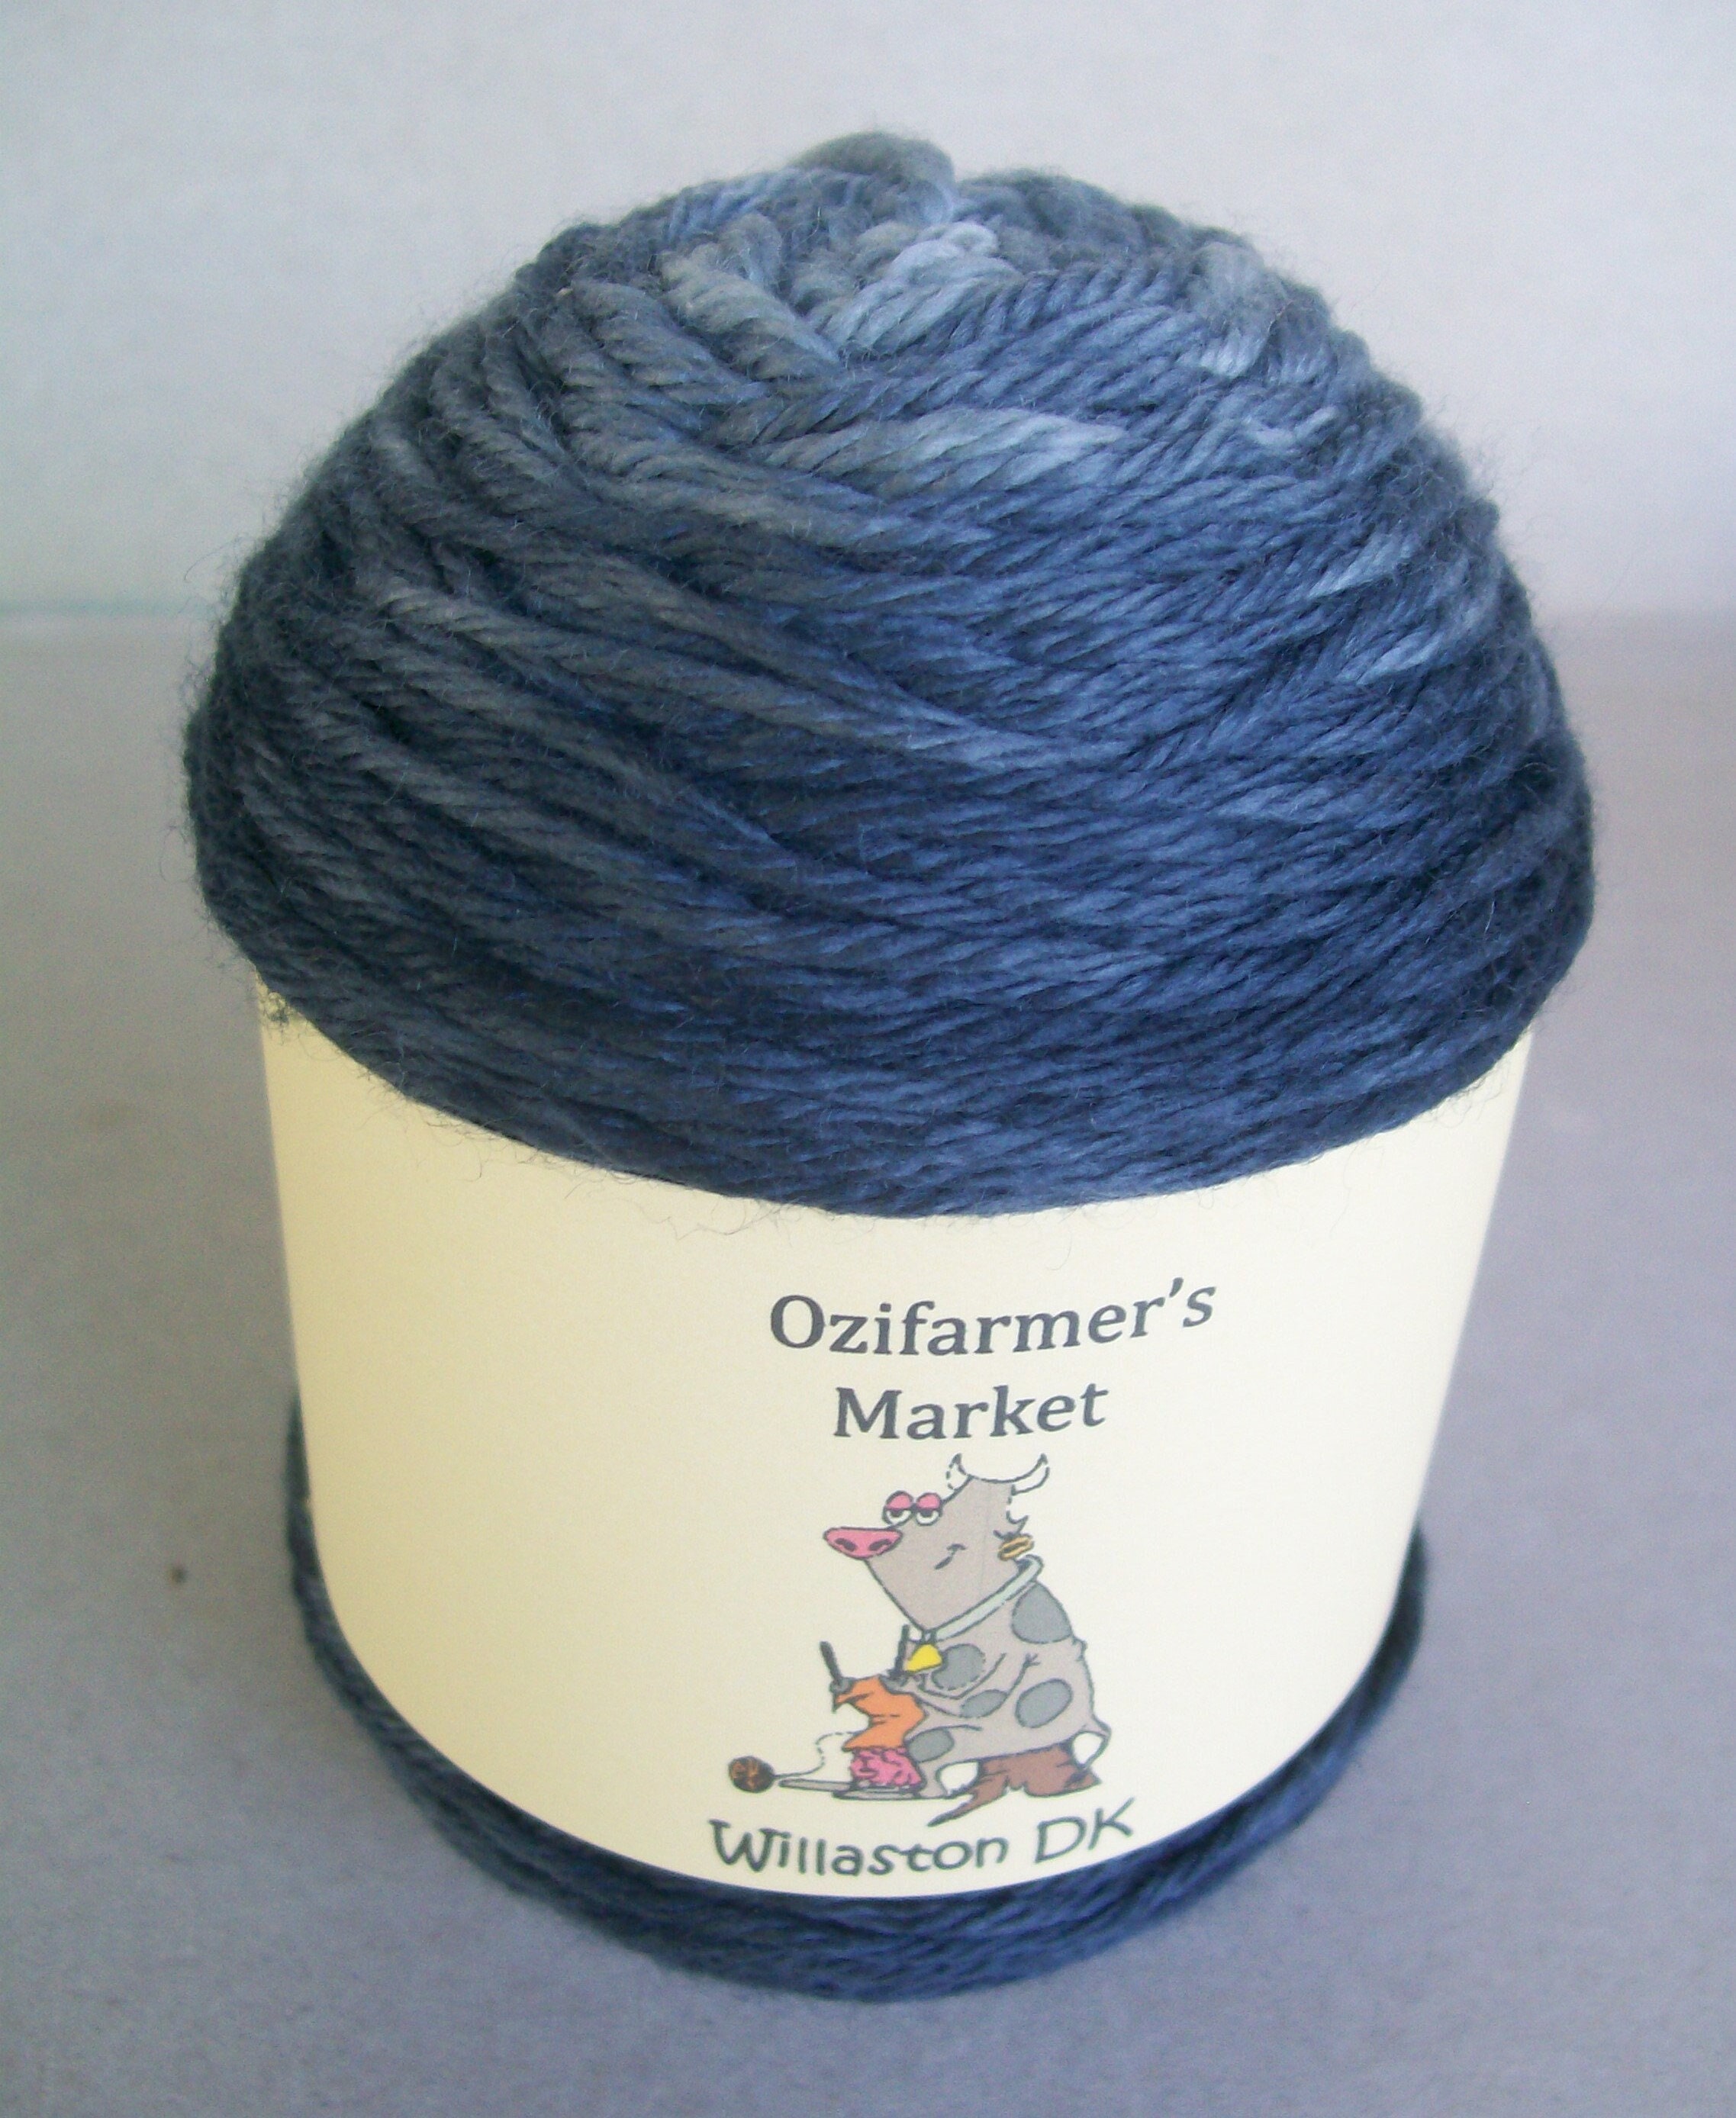 Fog 100g Alpha 8ply Tonal Hand Dyed Yarn DK Super Wash Merino Wool Nylon  Pale Grey Gray 